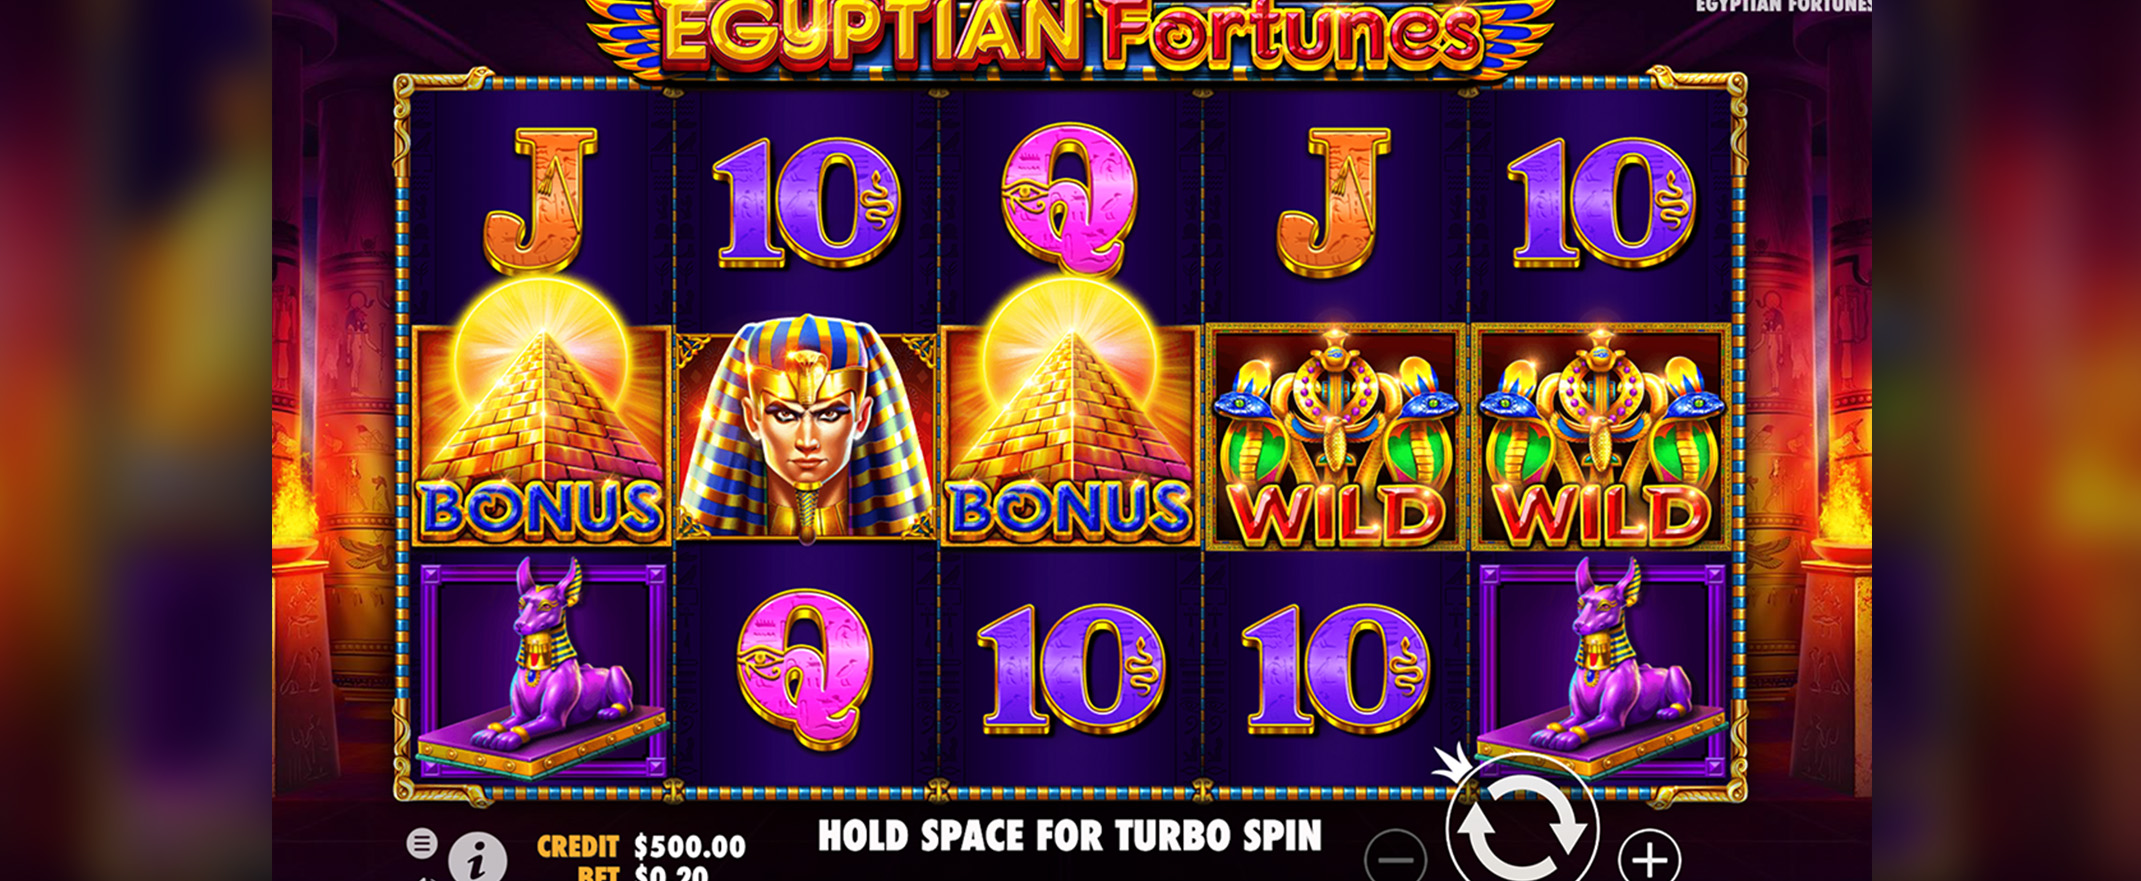 Egyptian Frotunes, uusi Pragmatic Play peli